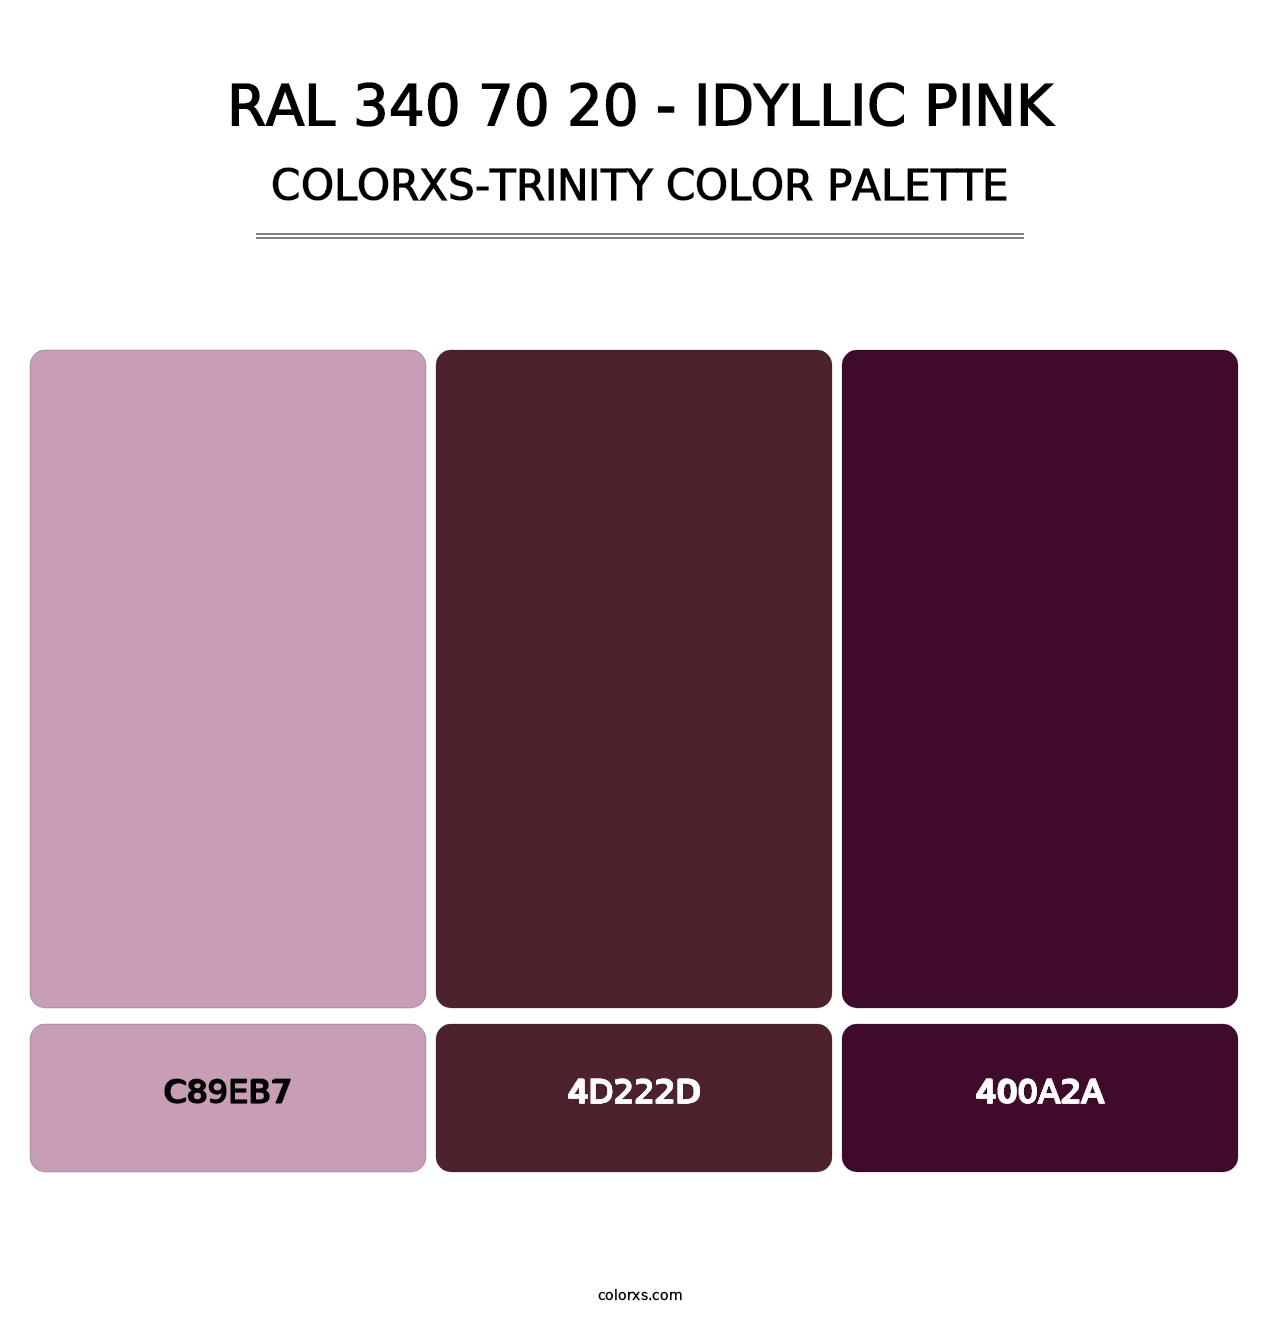 RAL 340 70 20 - Idyllic Pink - Colorxs Trinity Palette